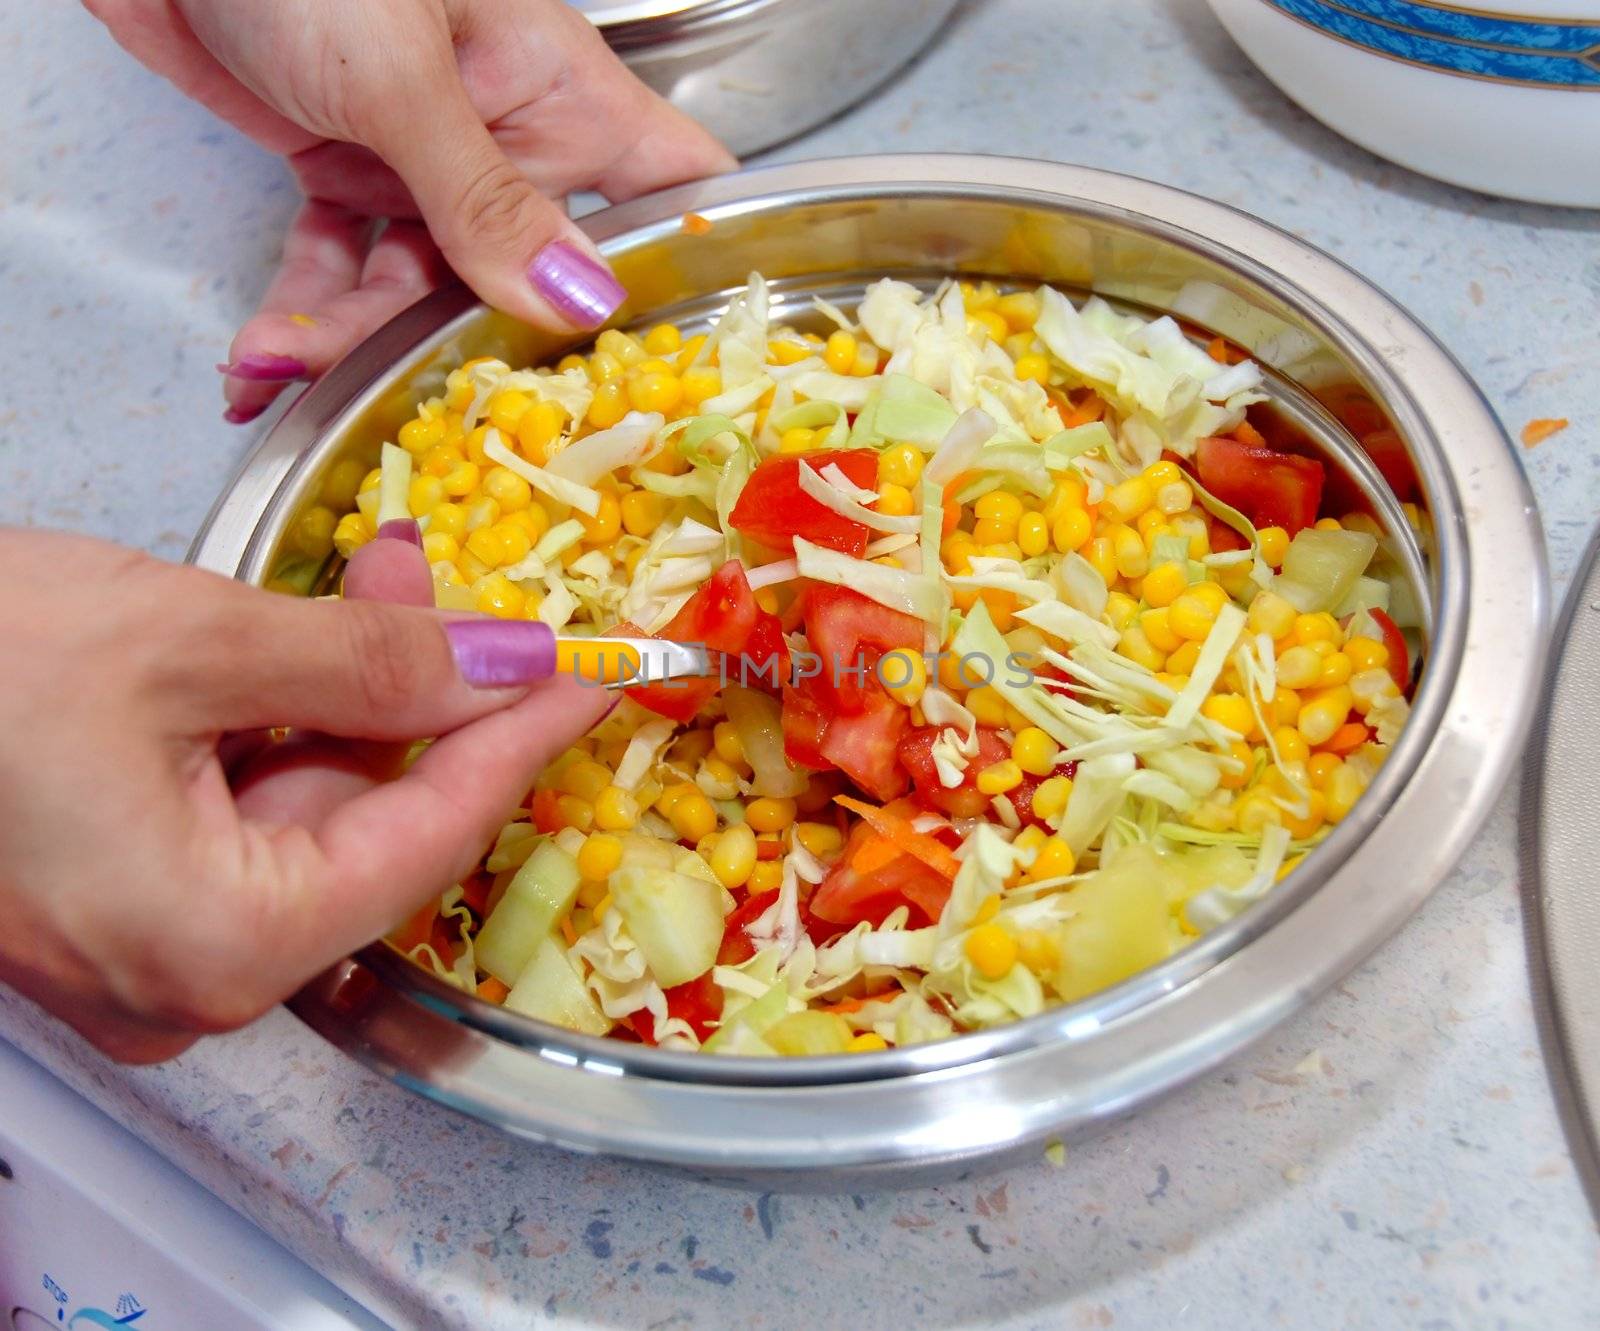 hands preparing appetizing corn salad with vegetables